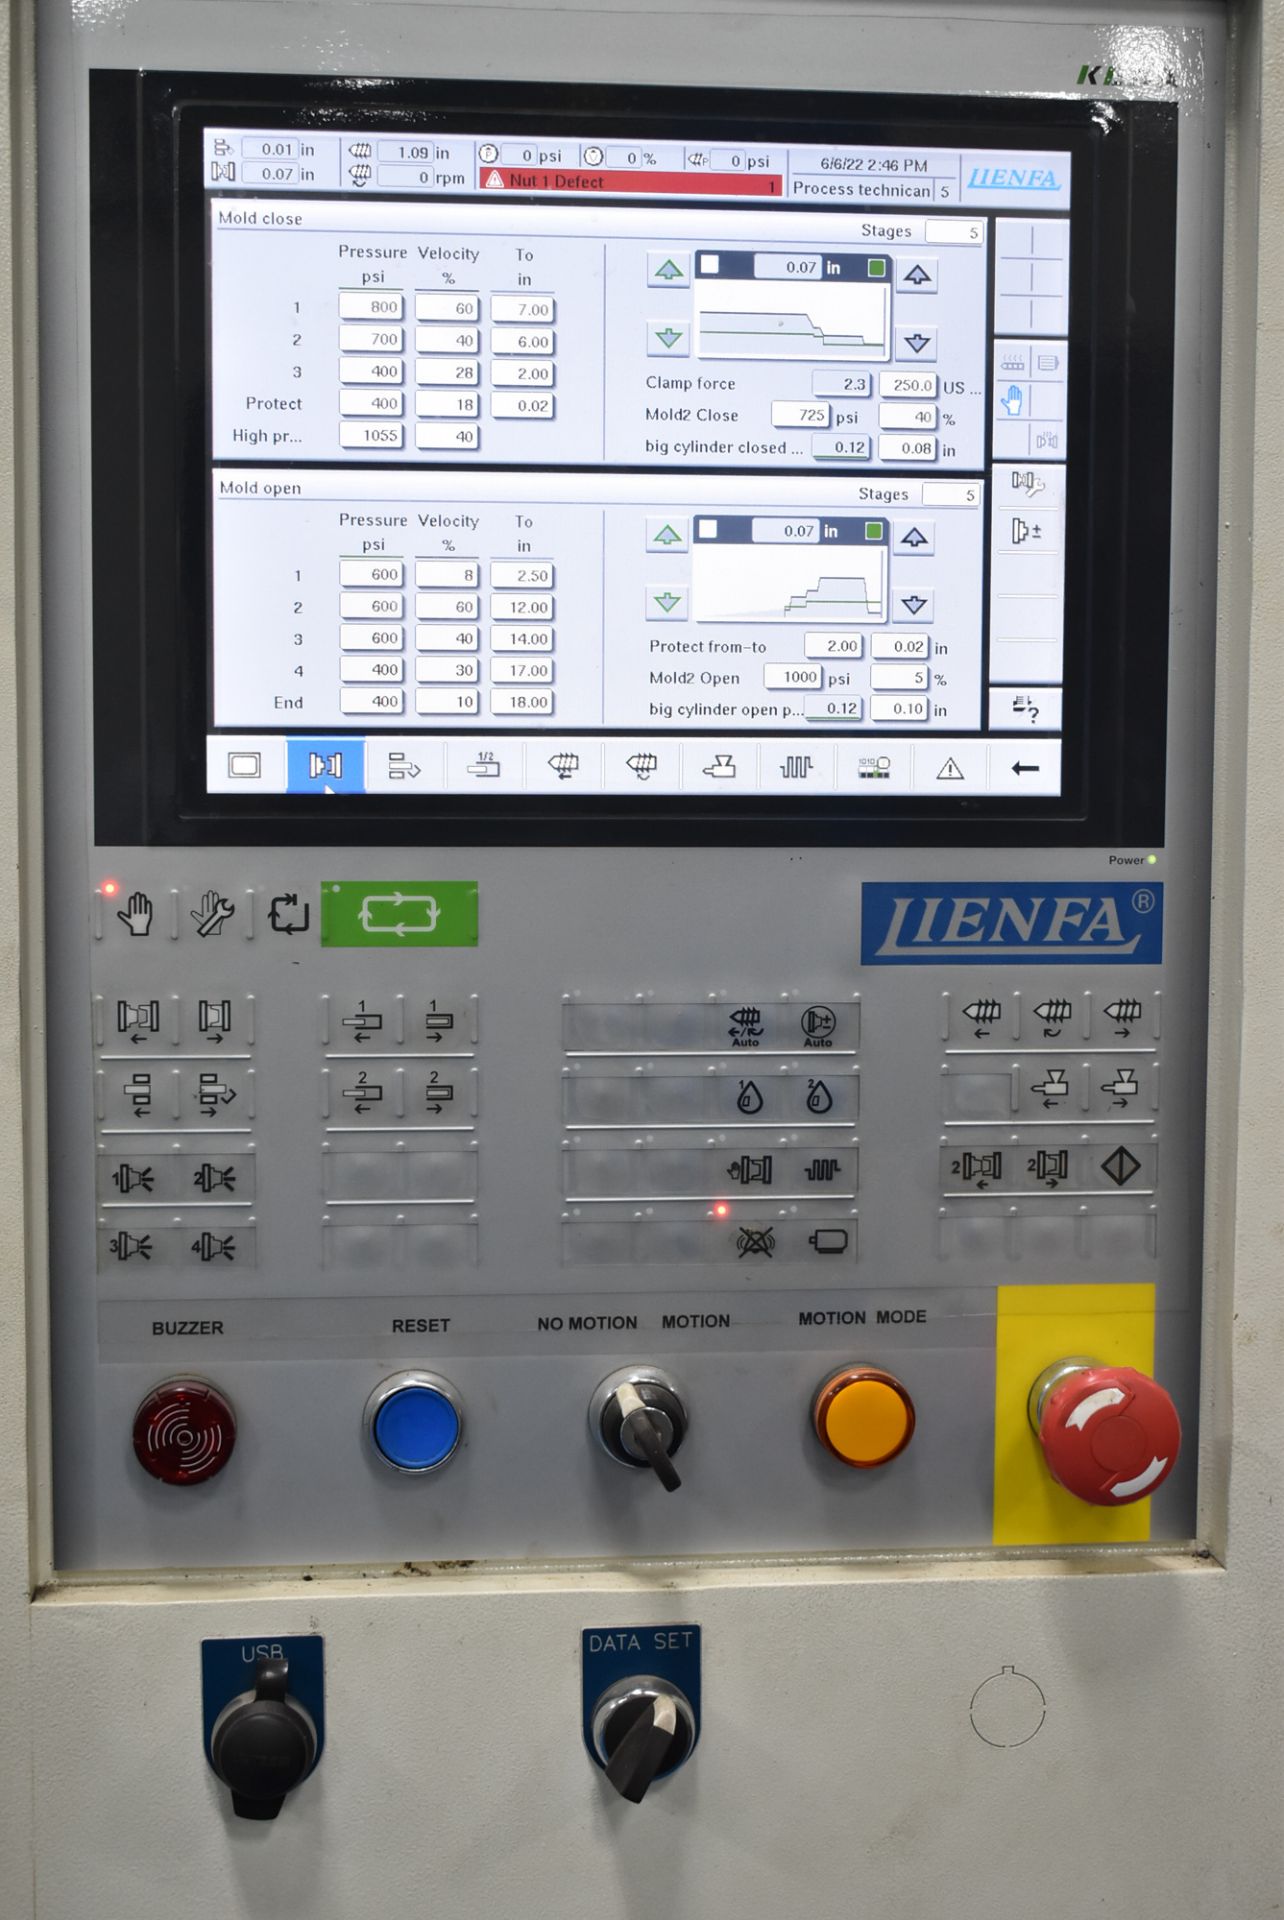 LIEN FA (2015) HB-557 MT-II 500 TON CAPACITY HORIZONTAL HYBRID PLASTIC INJECTION MOLDING MACHINE - Image 4 of 12